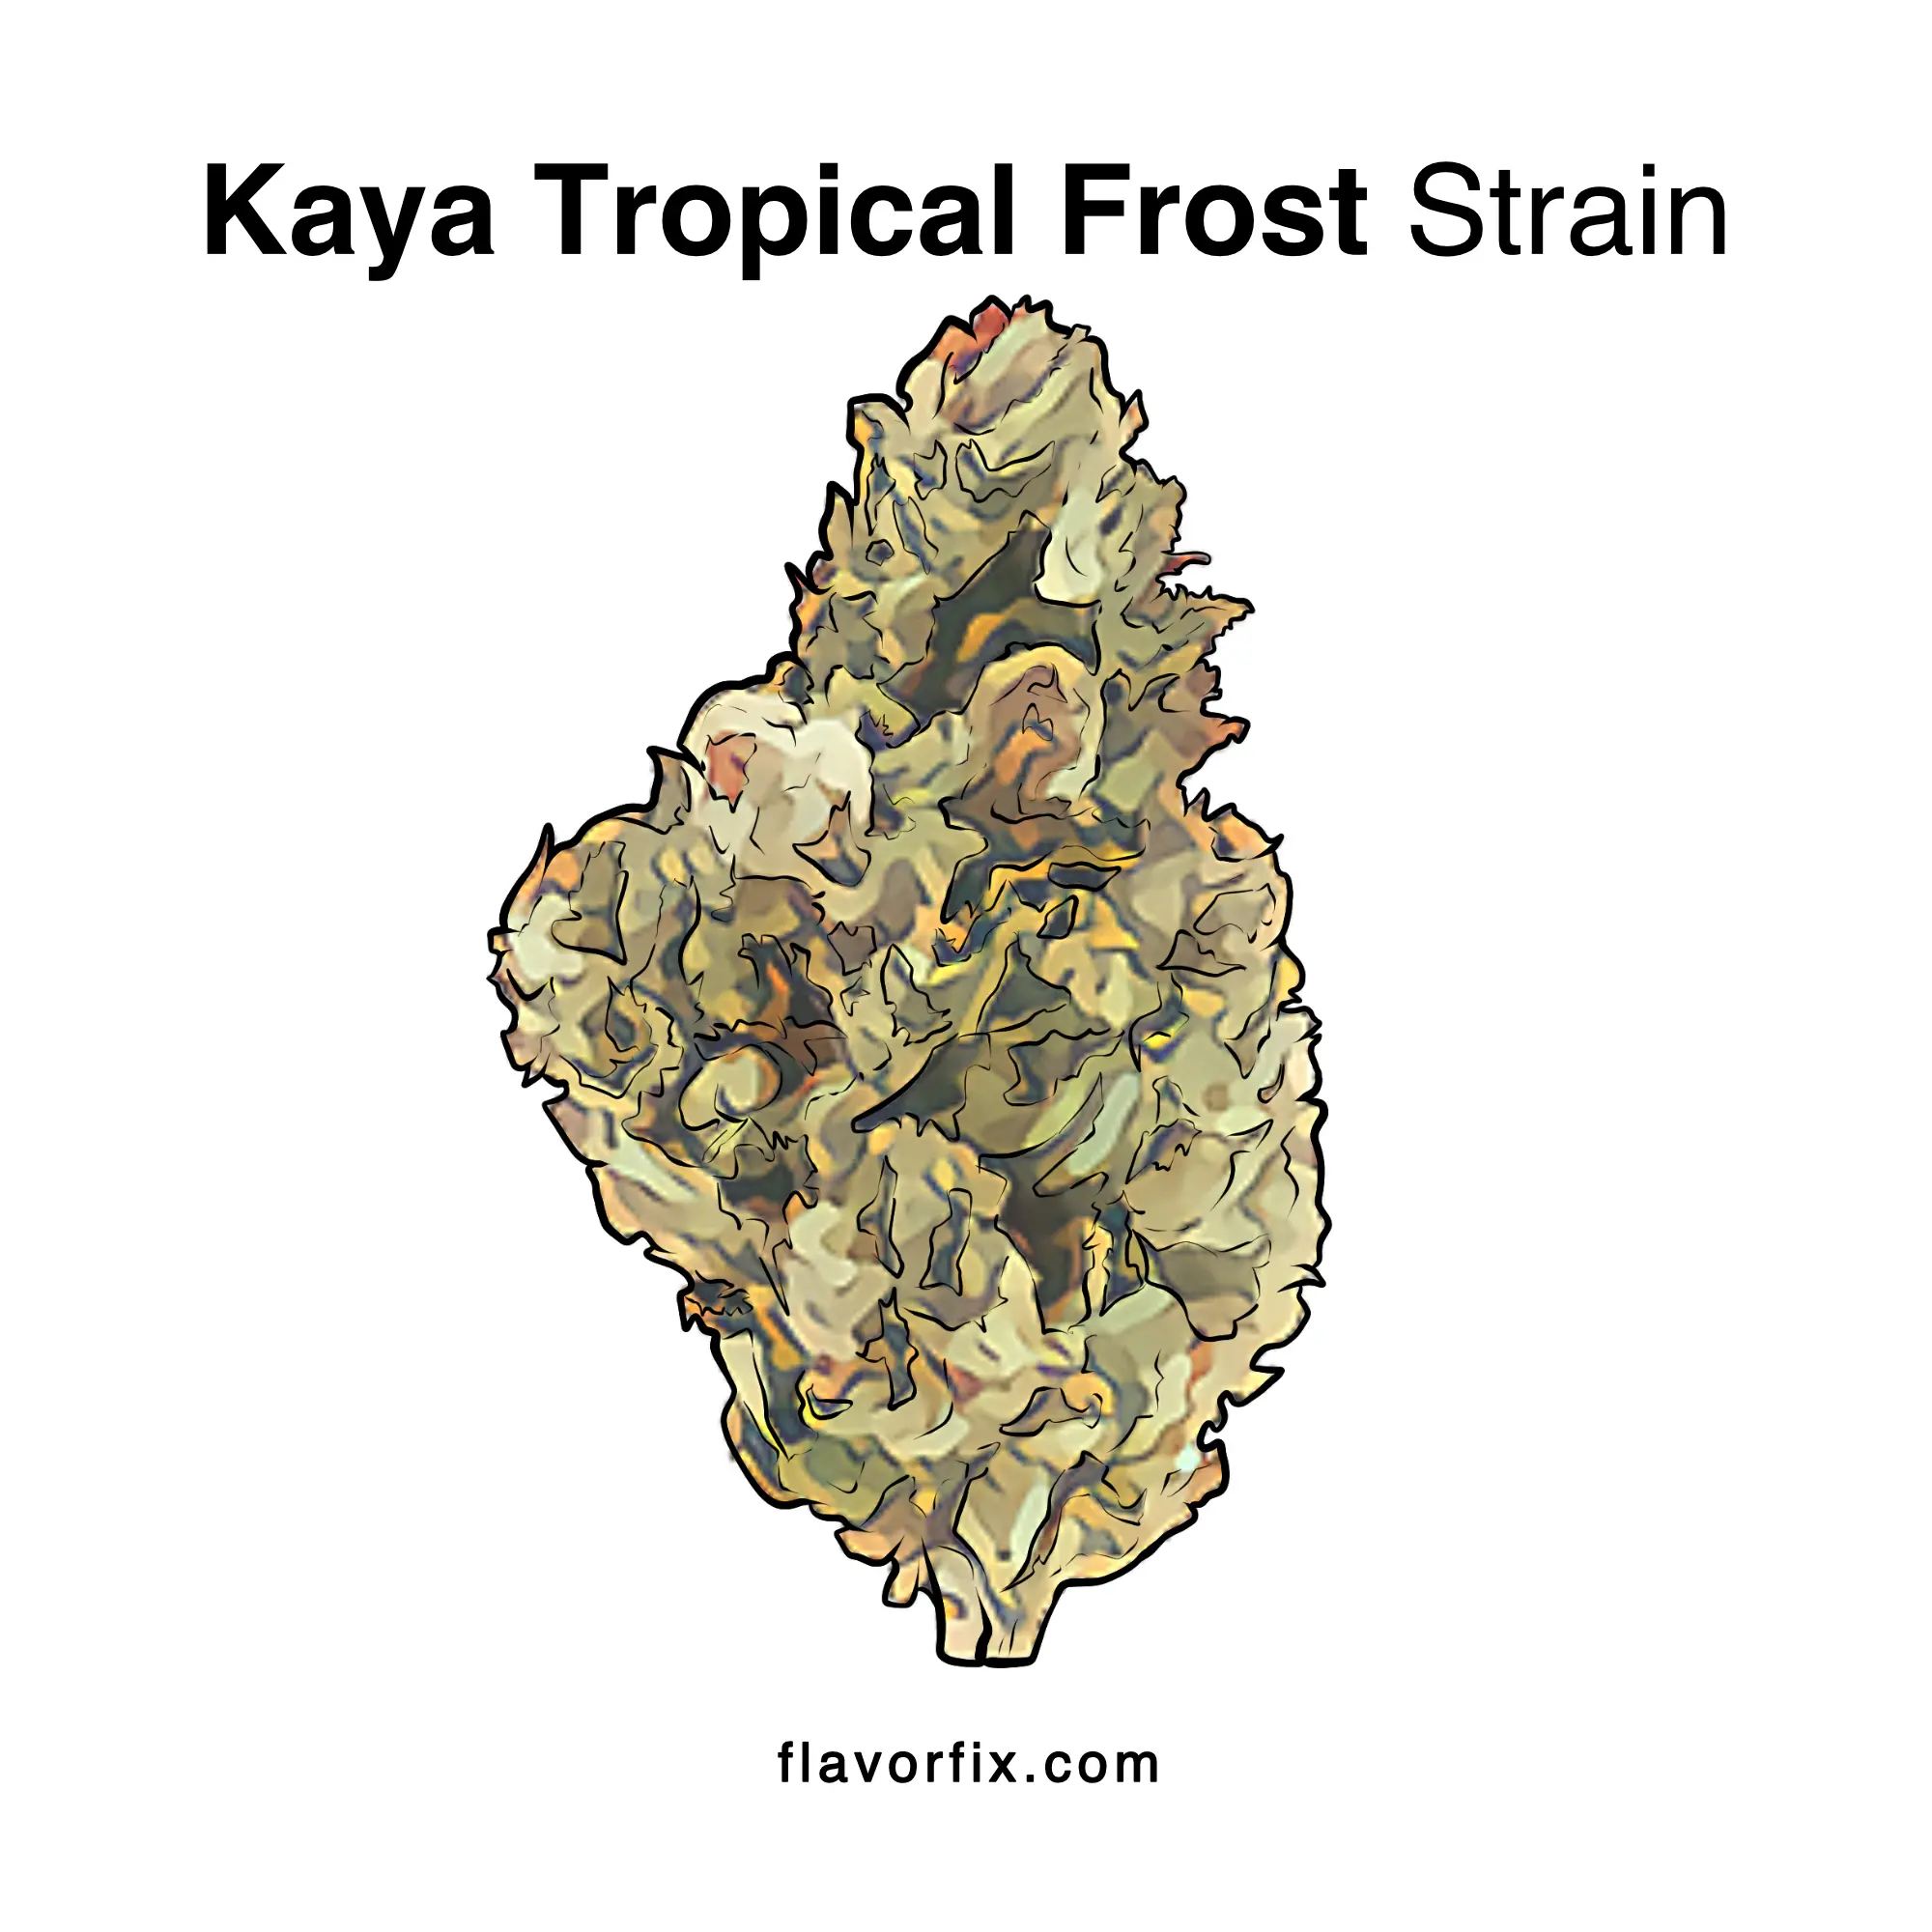 Kaya Tropical Frost Strain